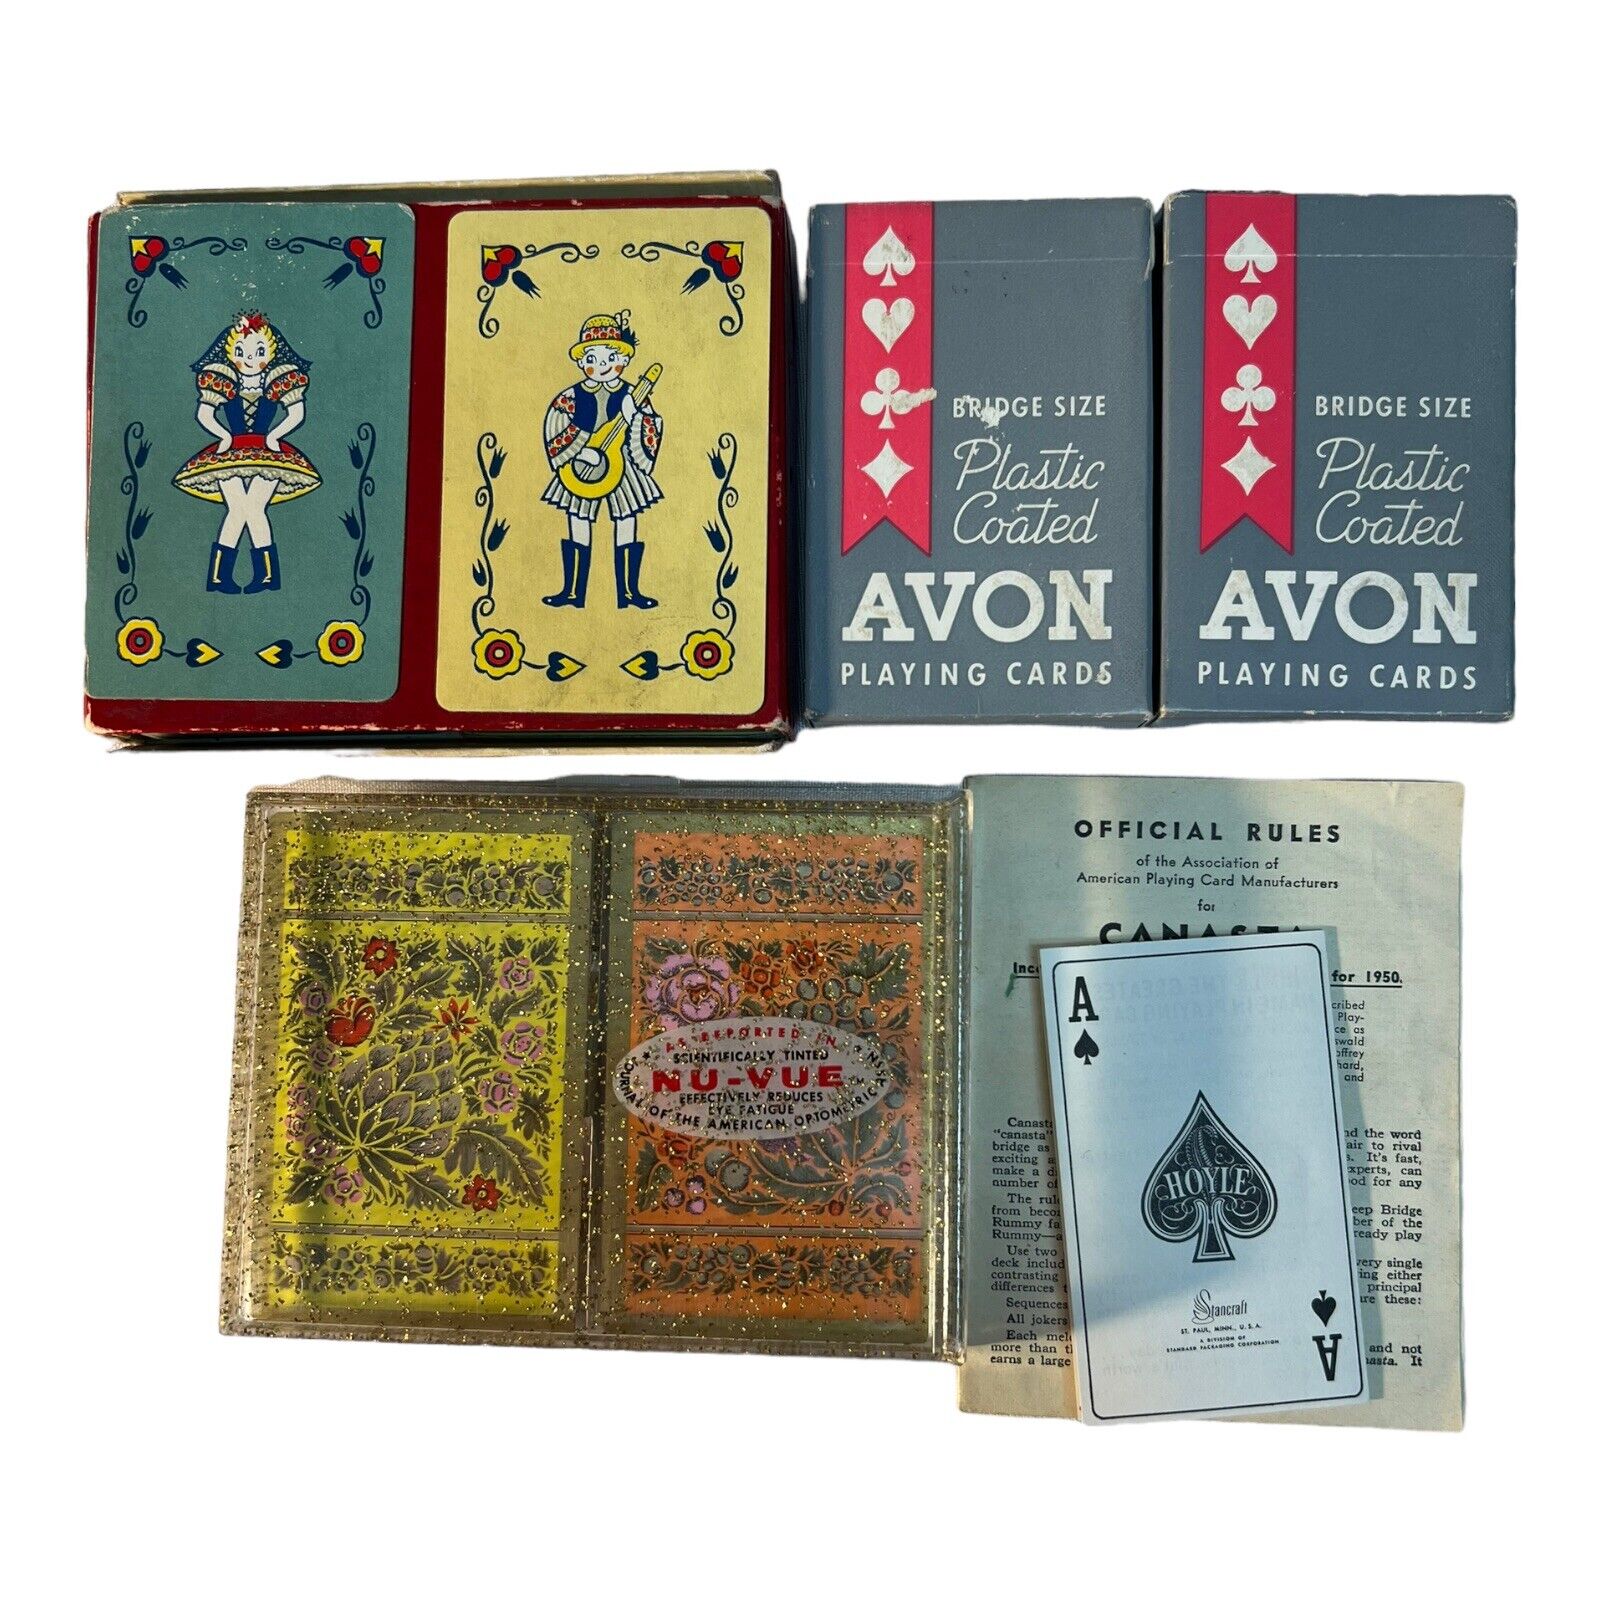 Vintage Playing Cards 2 /2 Decks Each, 2 Decks Avon 1 Unopened. Total 4 Boxes.